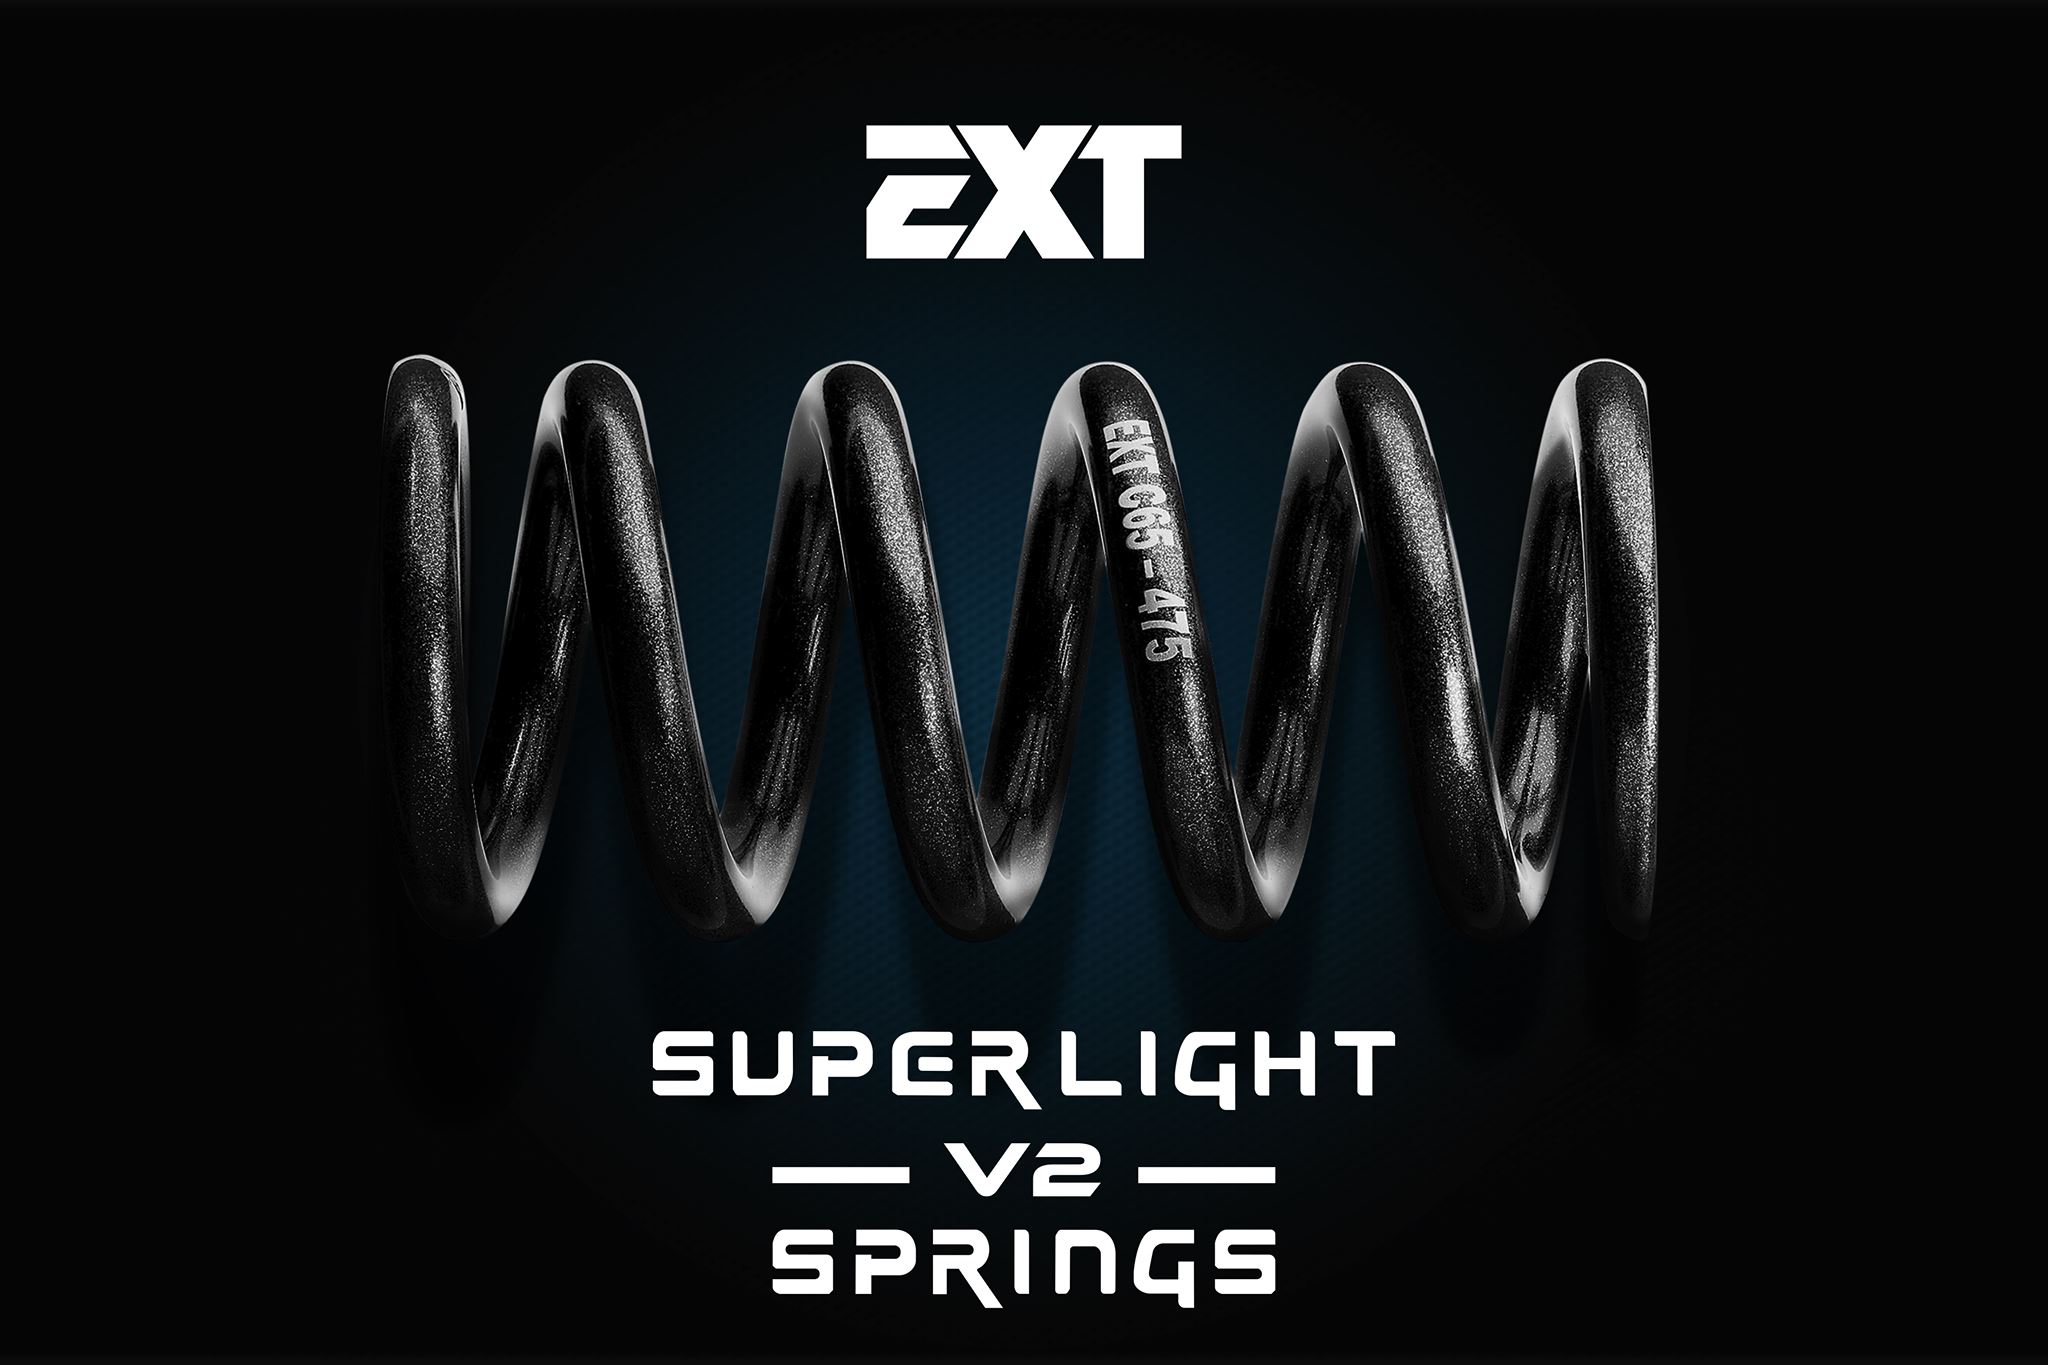 EXT Superlight V2 Springs